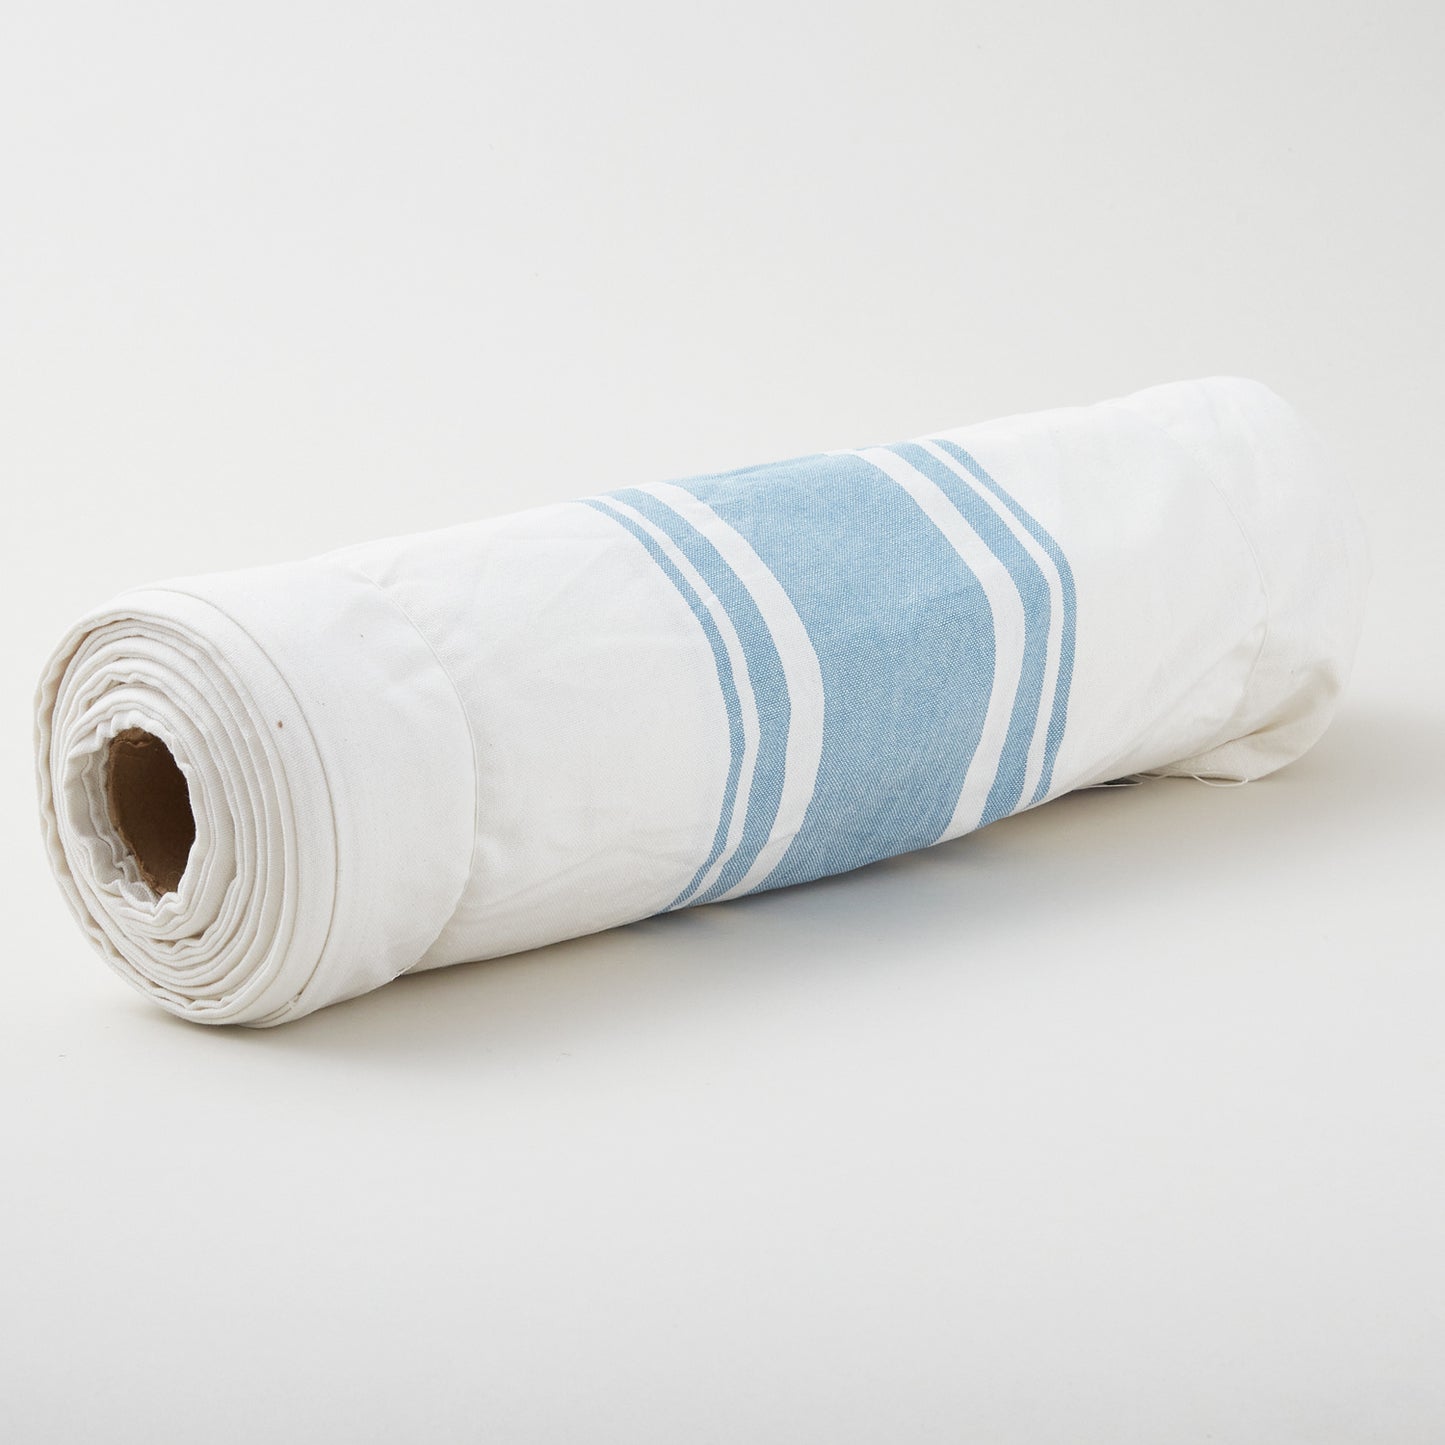 Easy Living Toweling - Center Stripe White Sky Yardage Alternative View #1